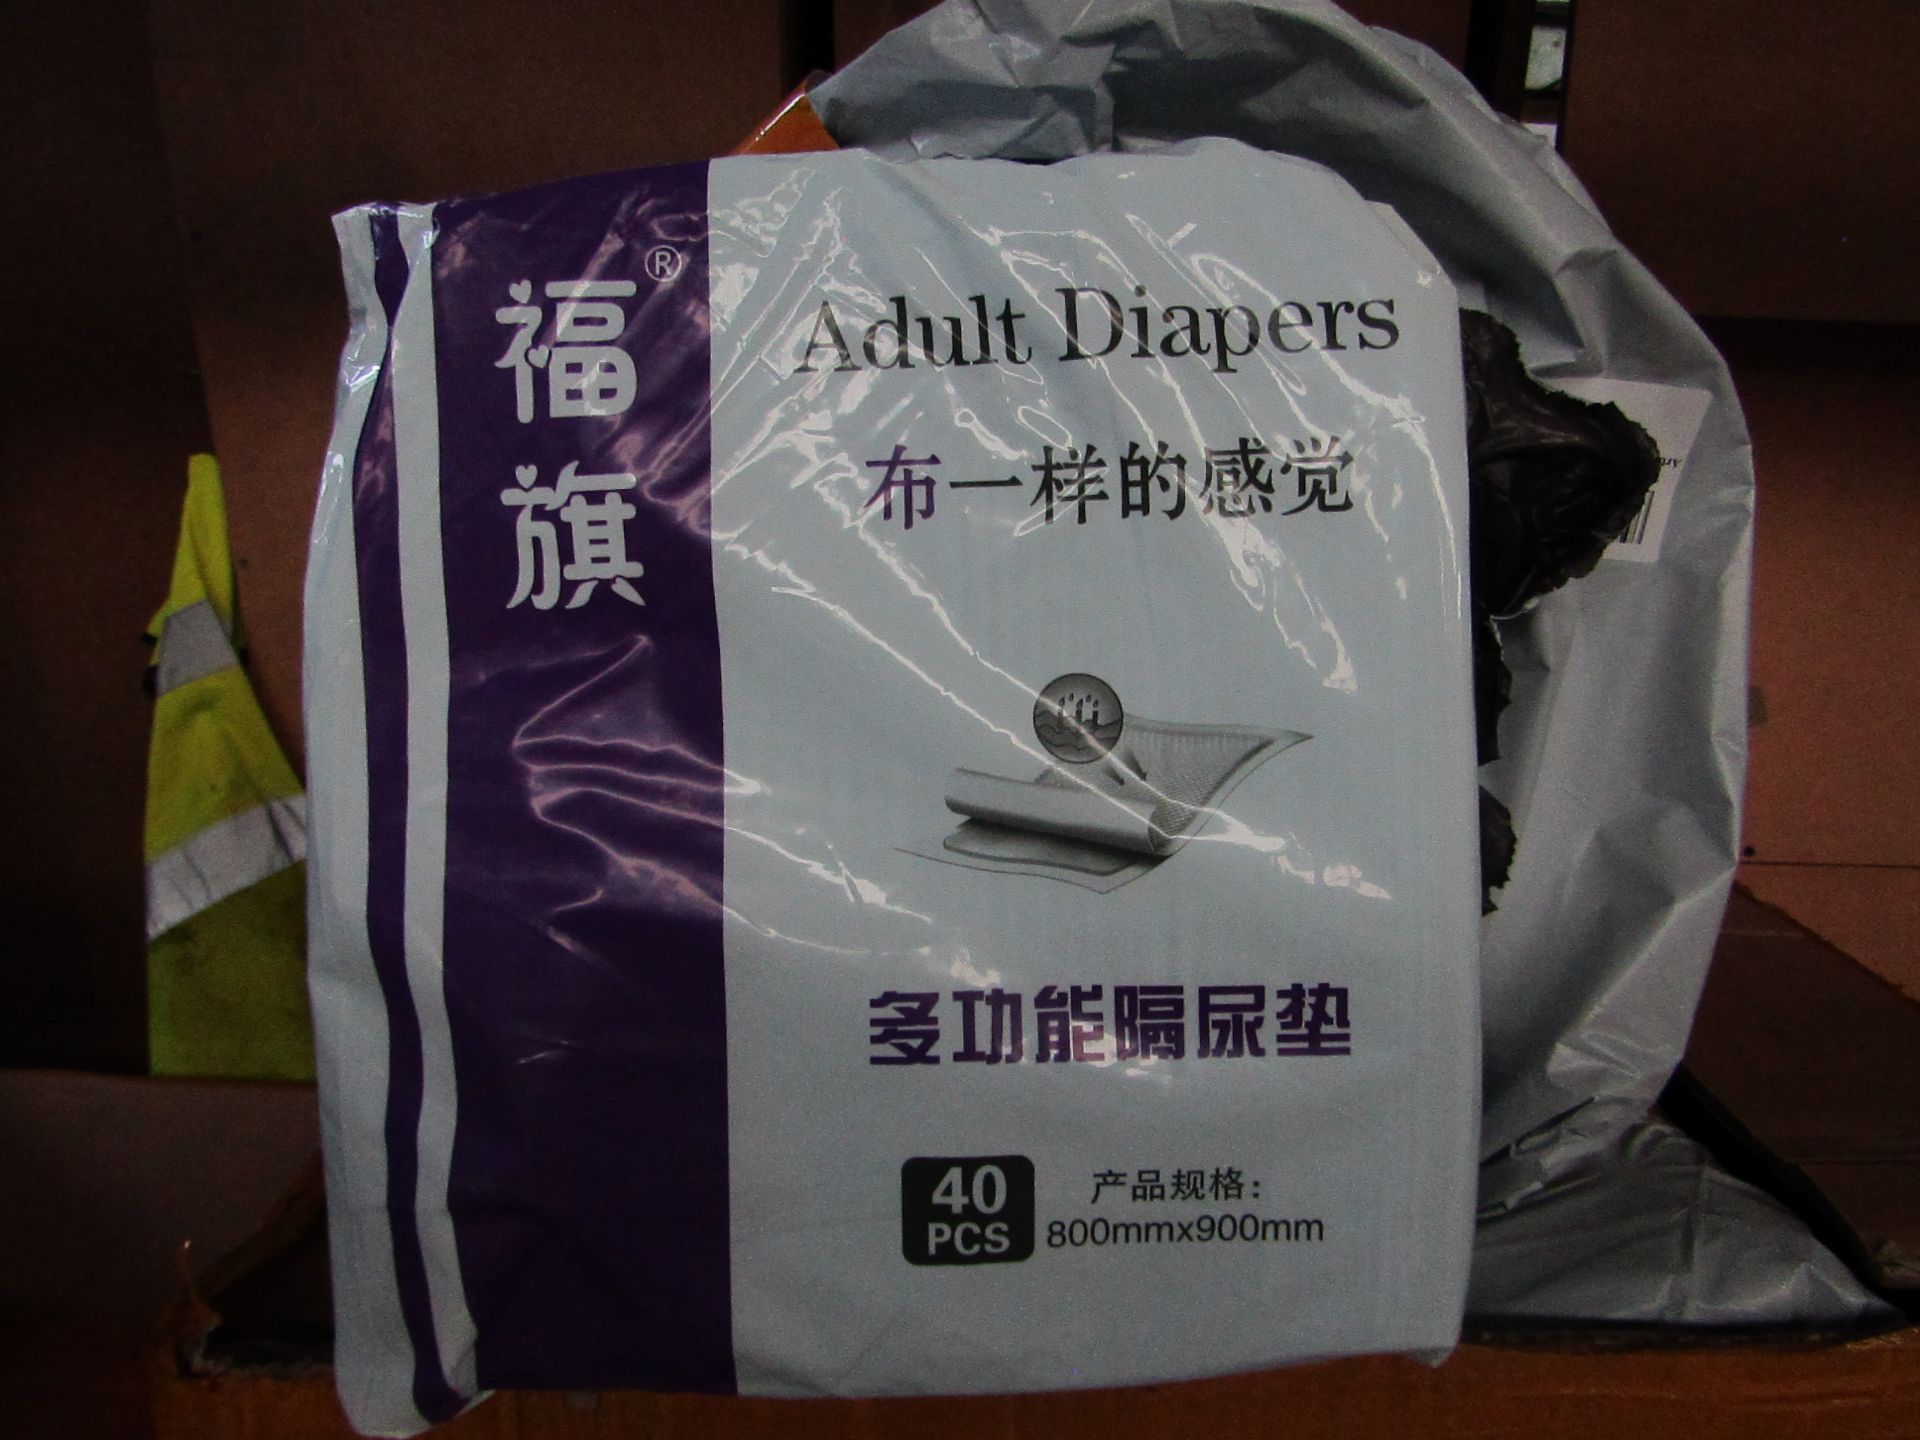 4x Packs Being : Adult Diapers ( 800mm X 800mm ) 40-Diapers Per Pack - Unused & Packaged.